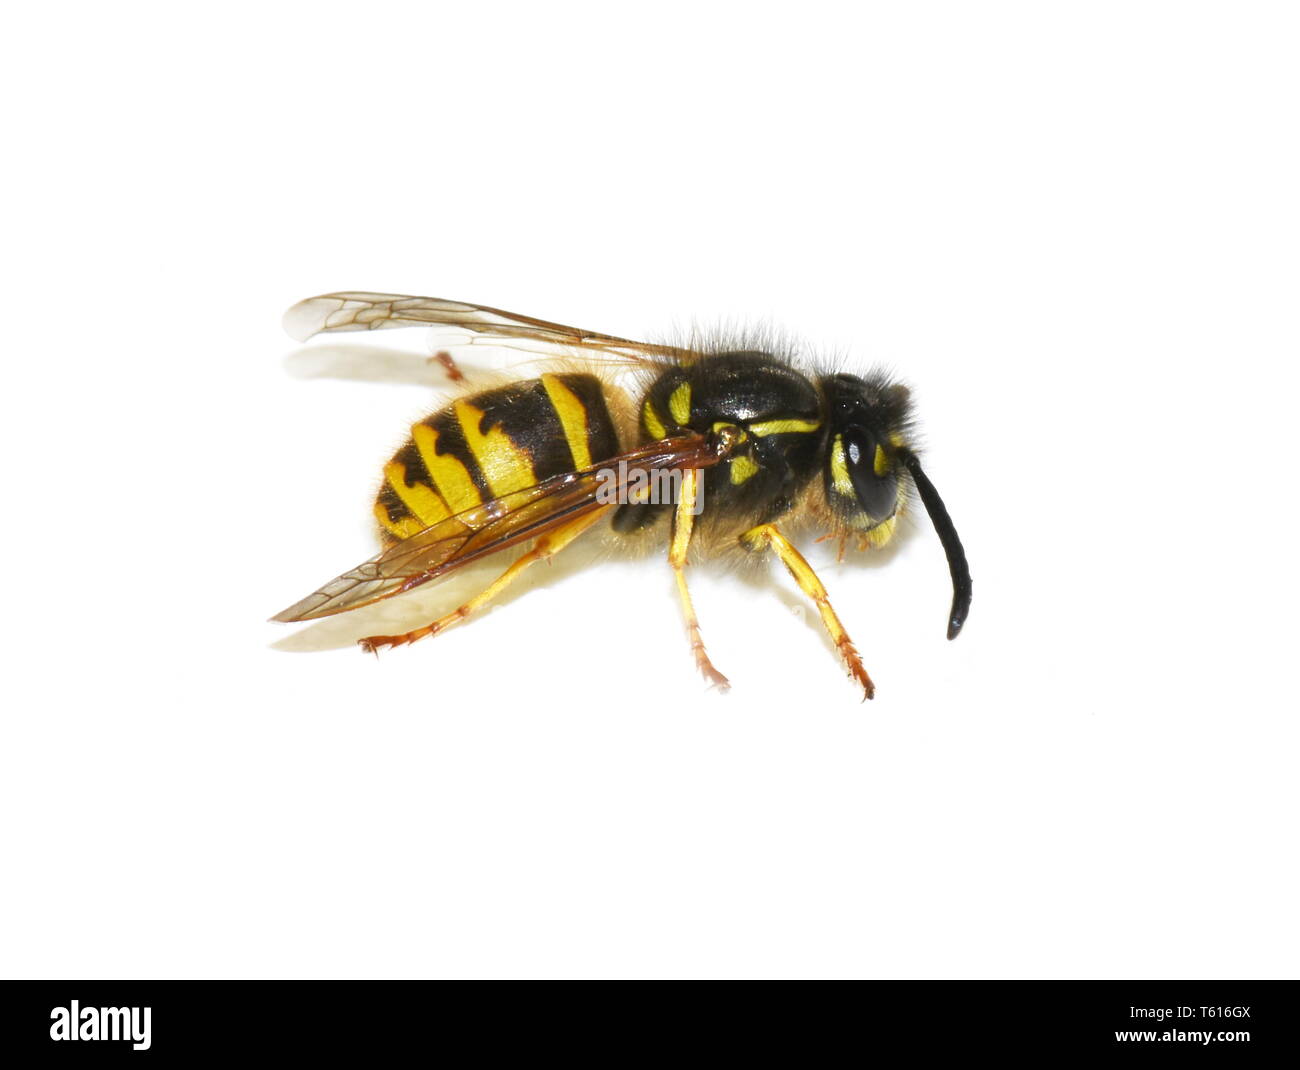 Norwegian wasp Dolichovespula norwegica on white background Stock Photo